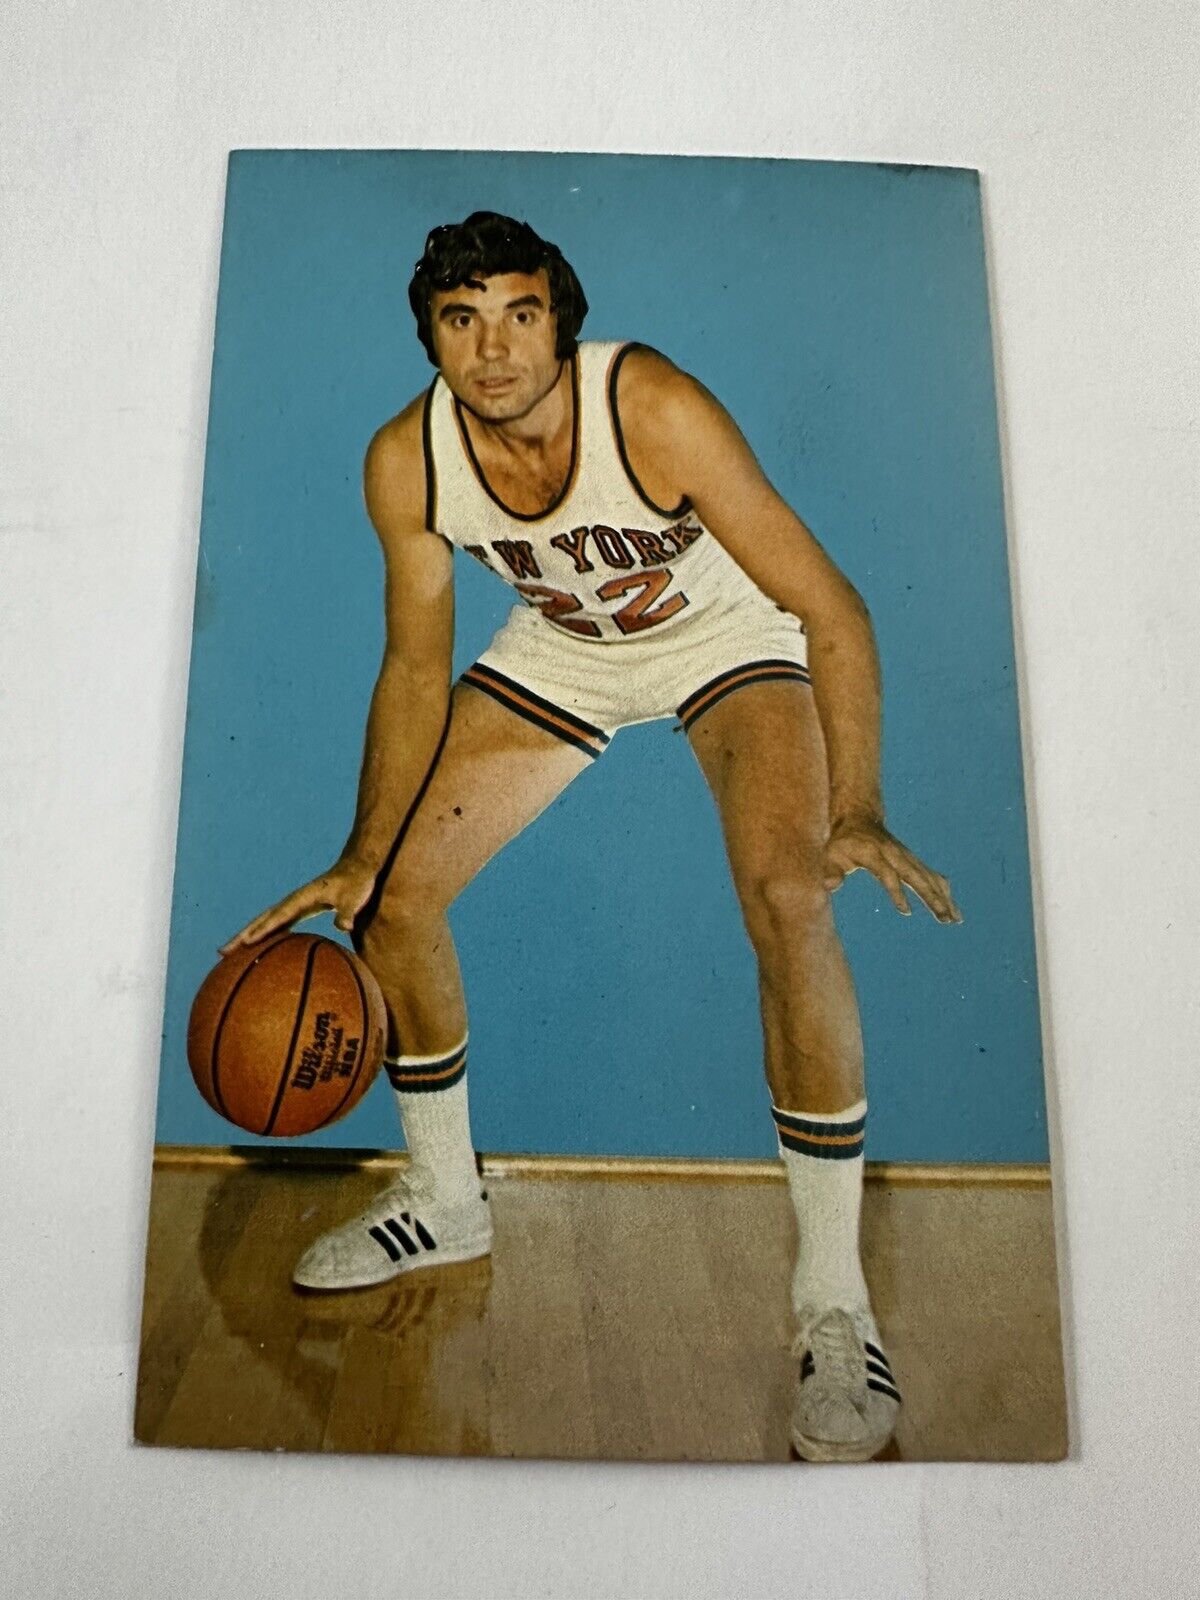 1973 NBA Players Association NBPA Postcard Dave DeBusschere Knicks